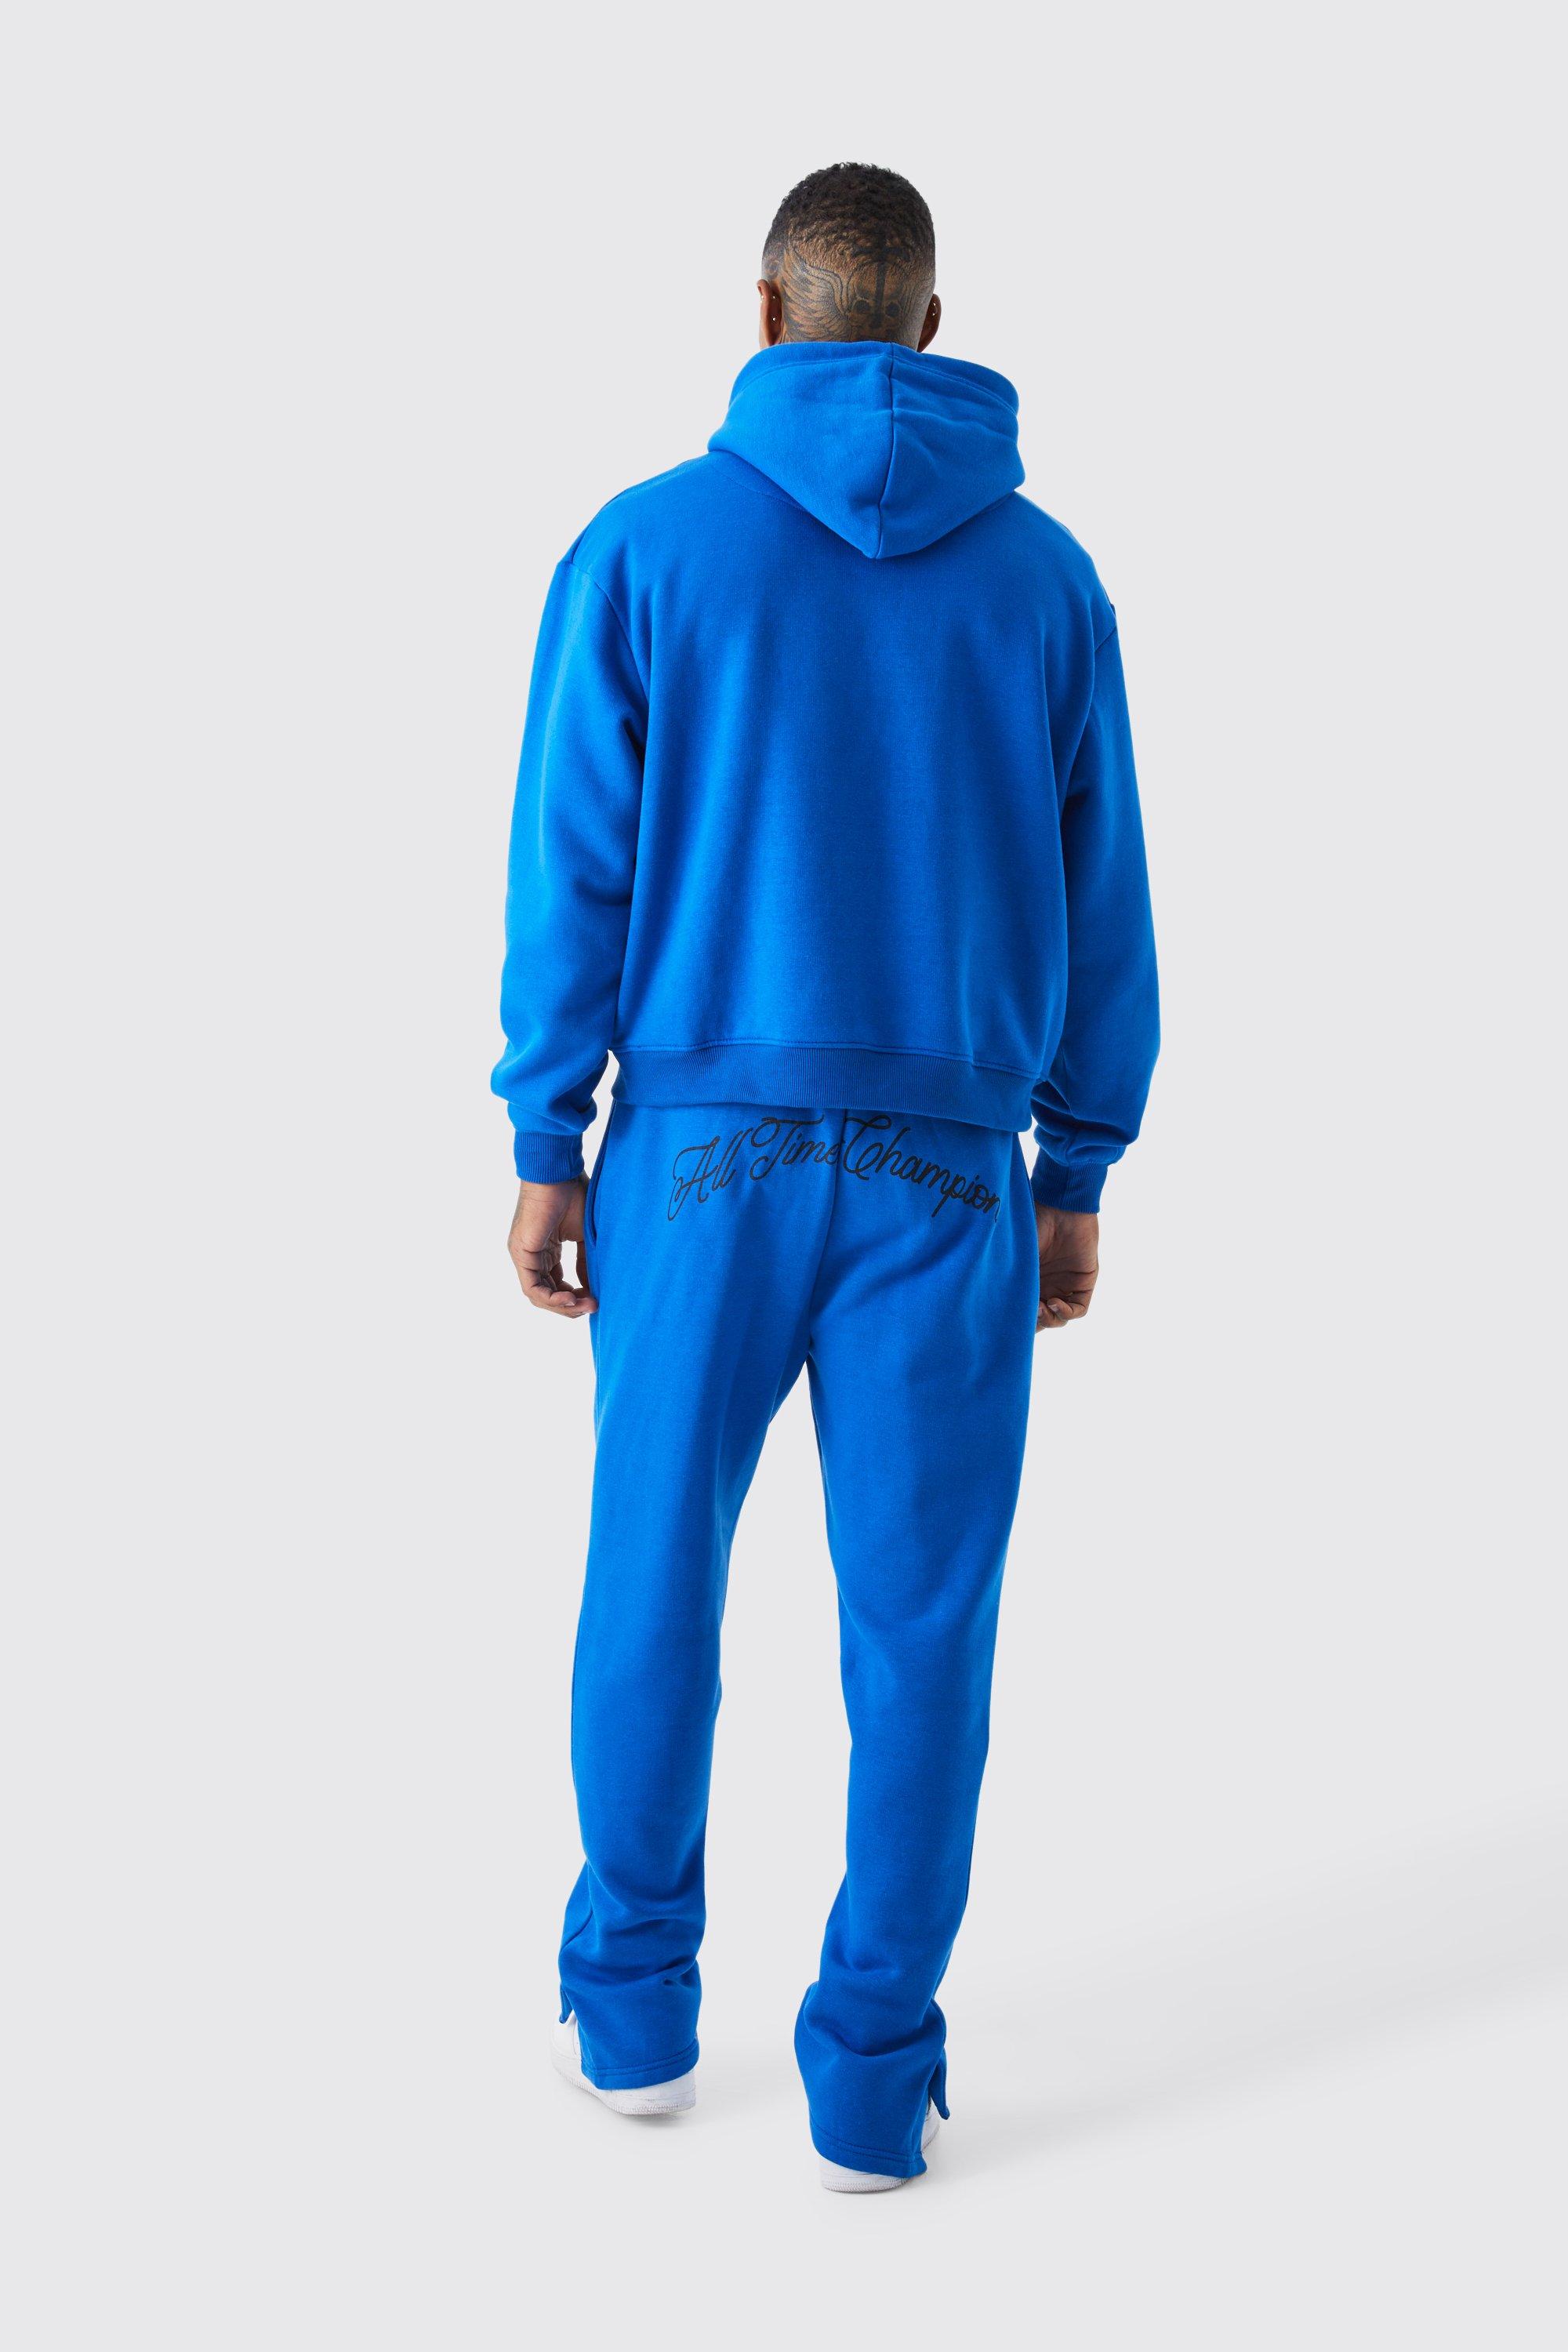 Unisex Hooded Track Suit (Royal Blue)